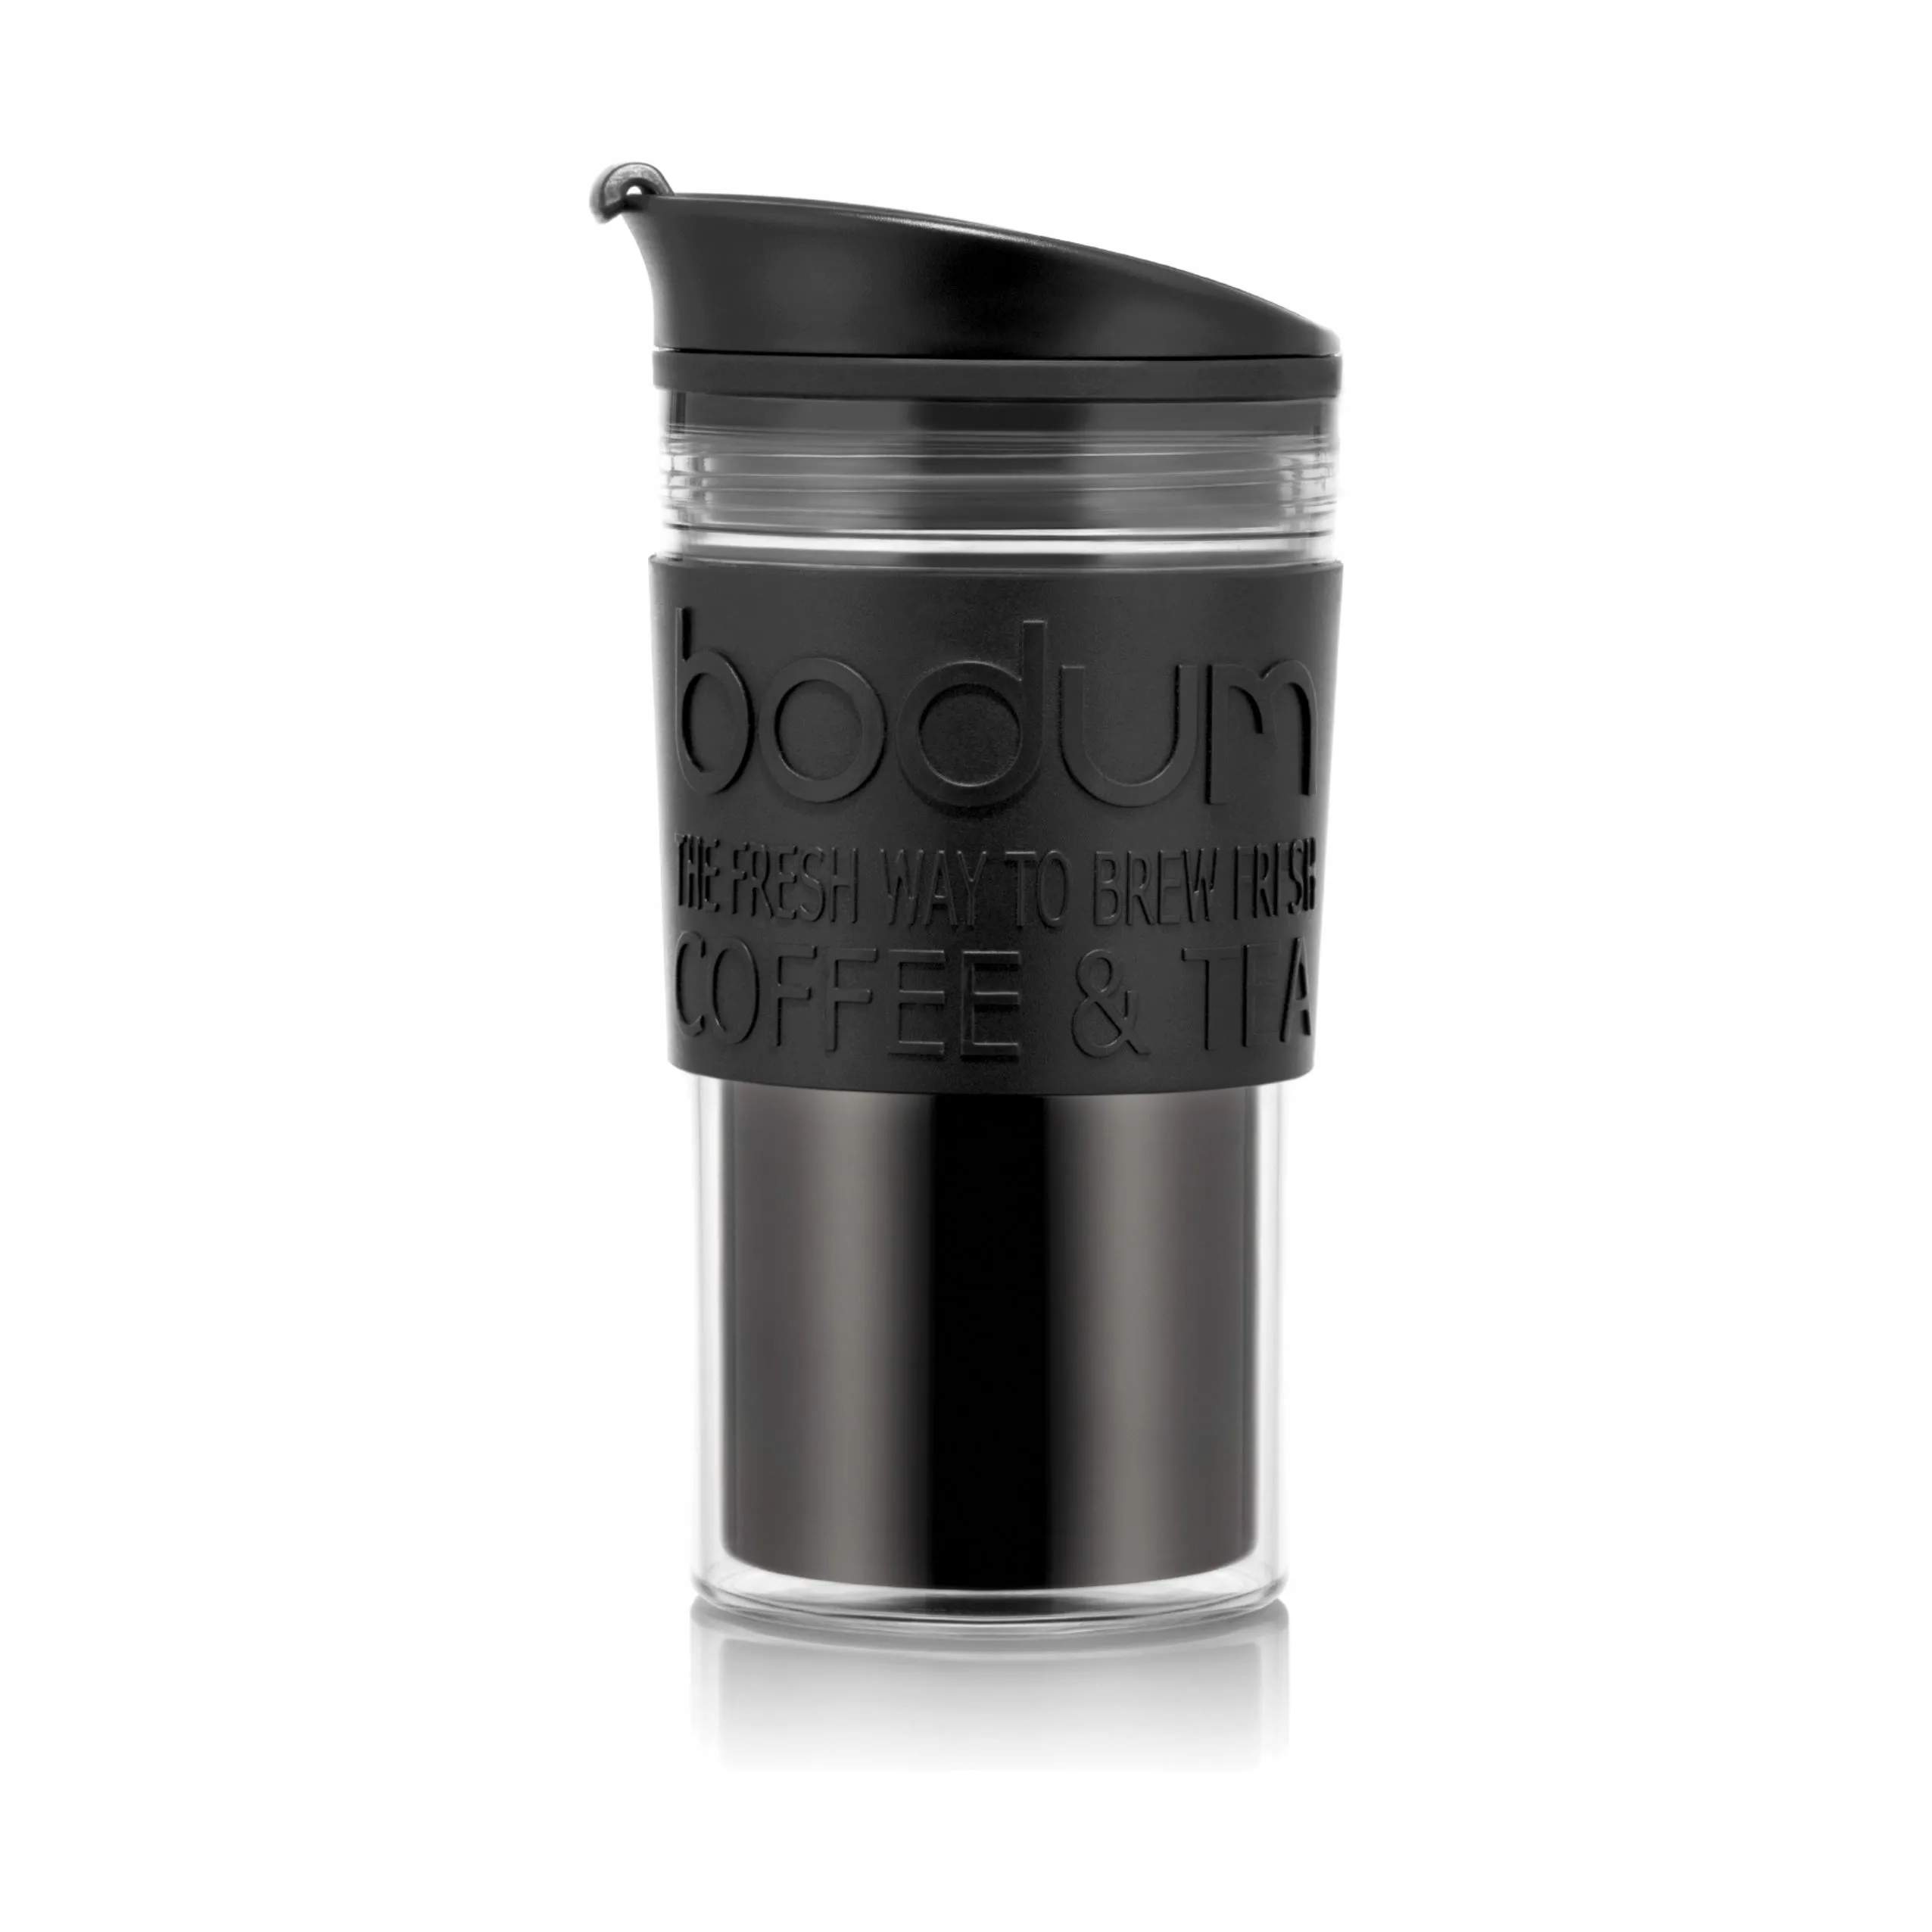 Bodum - Rejsekrus 0.35 liter - BPA-fri plastik - Sort | Imerco